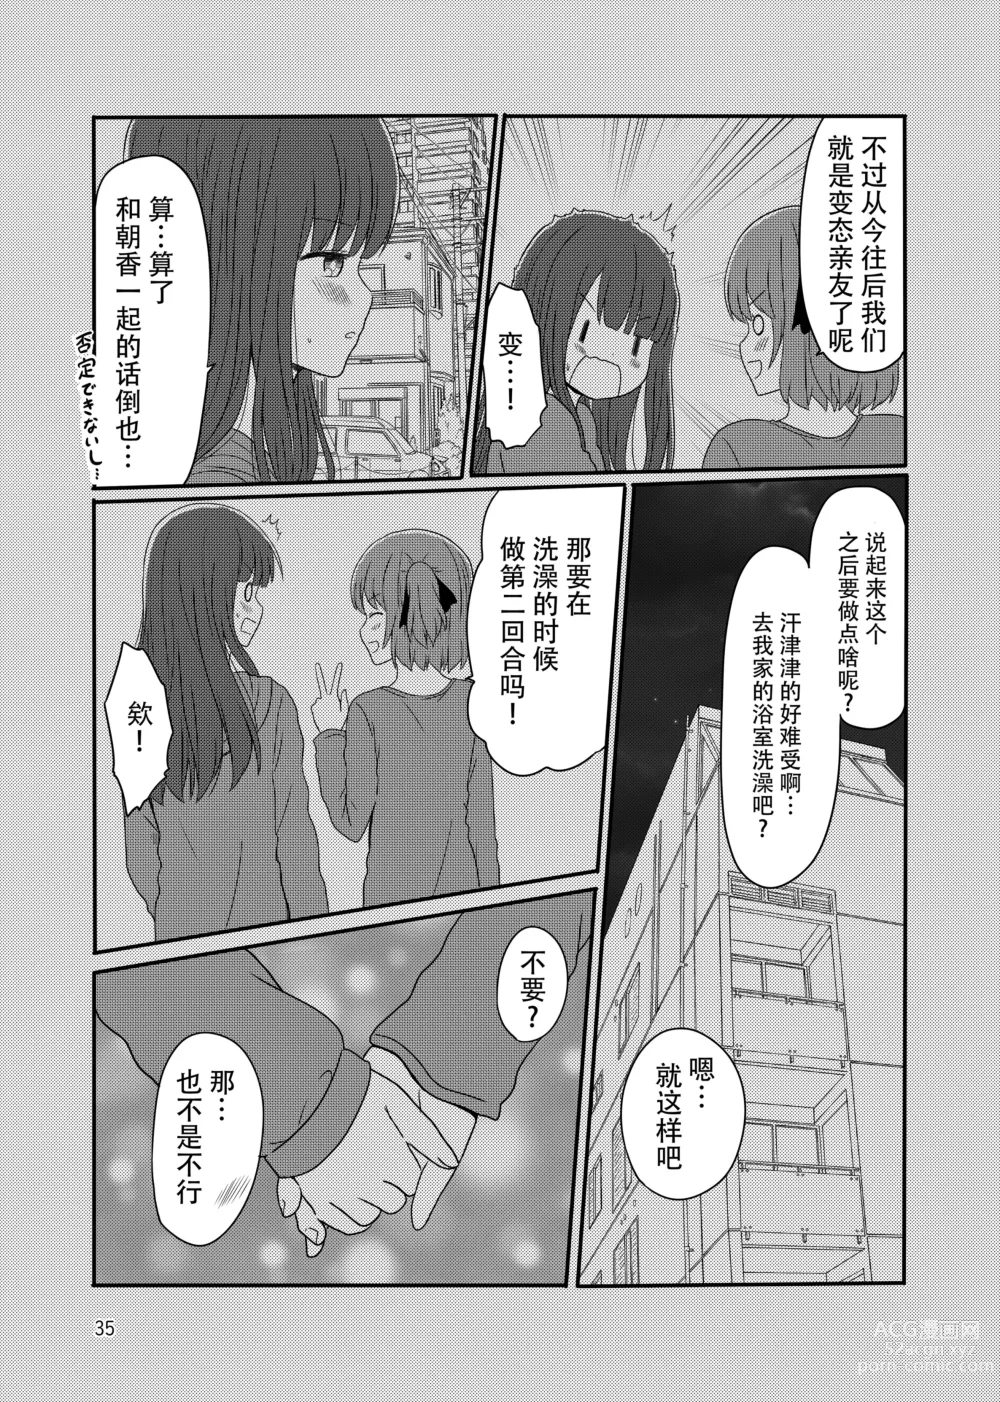 Page 33 of manga Roshutsu Play suru Yuripple